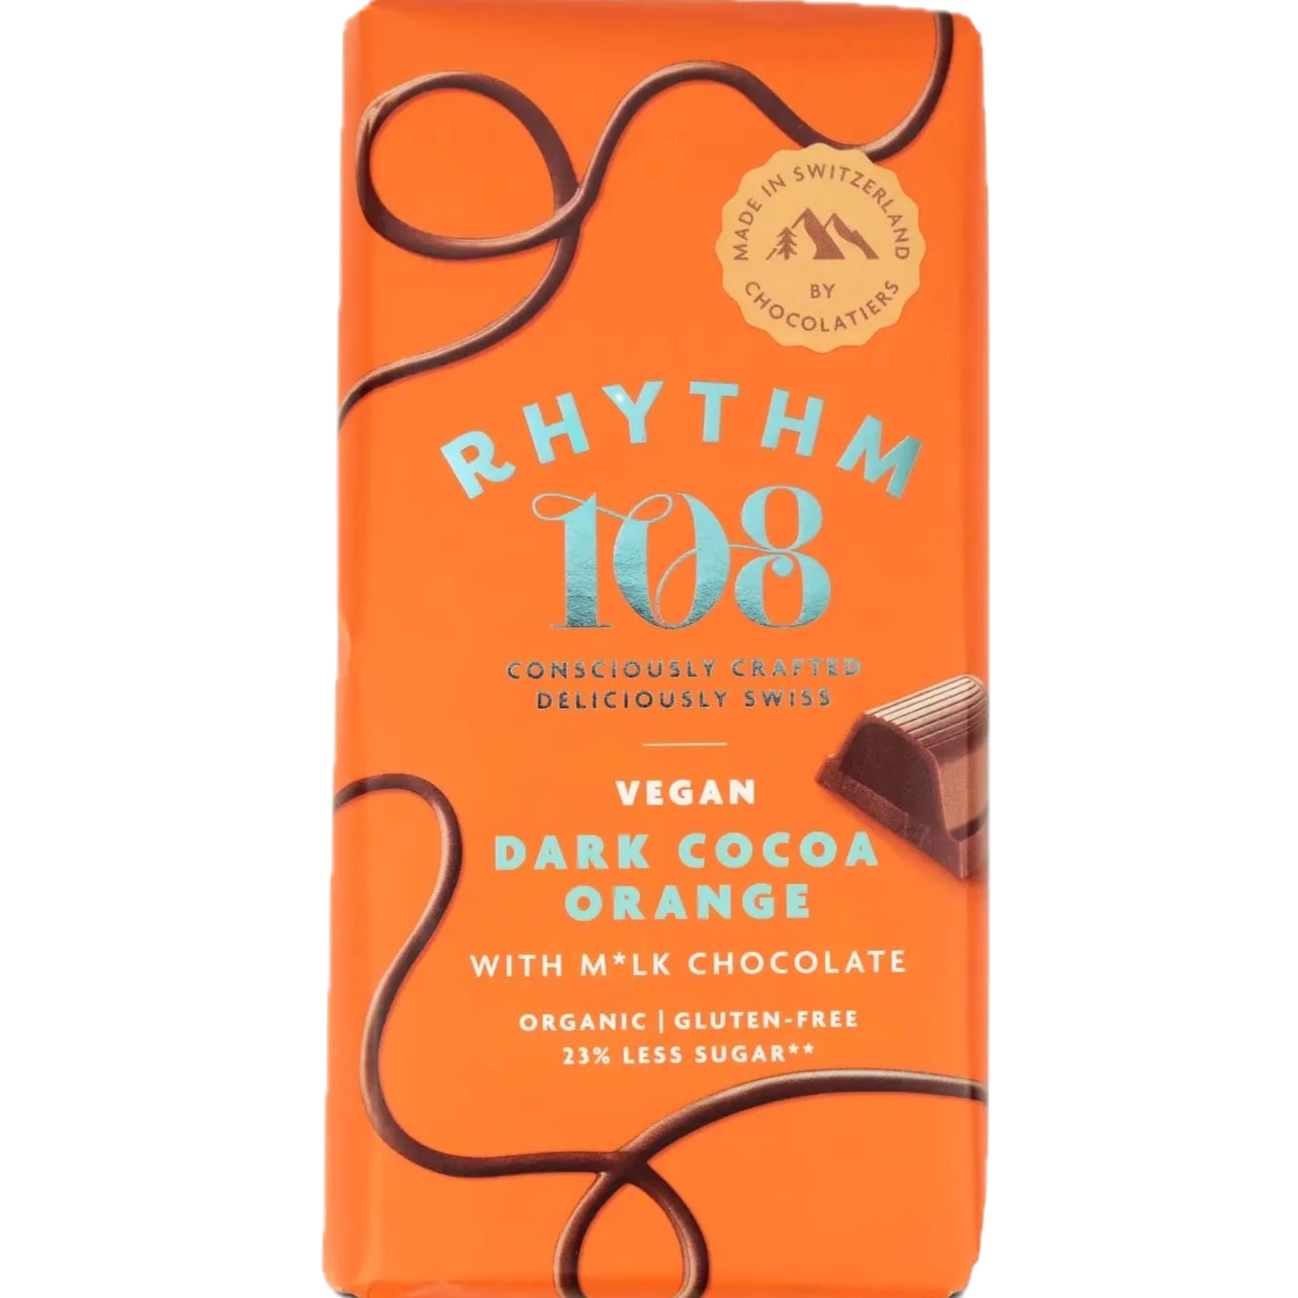 Rhythm 108 | Chocolate: Dark Cocoa Orange (100g)